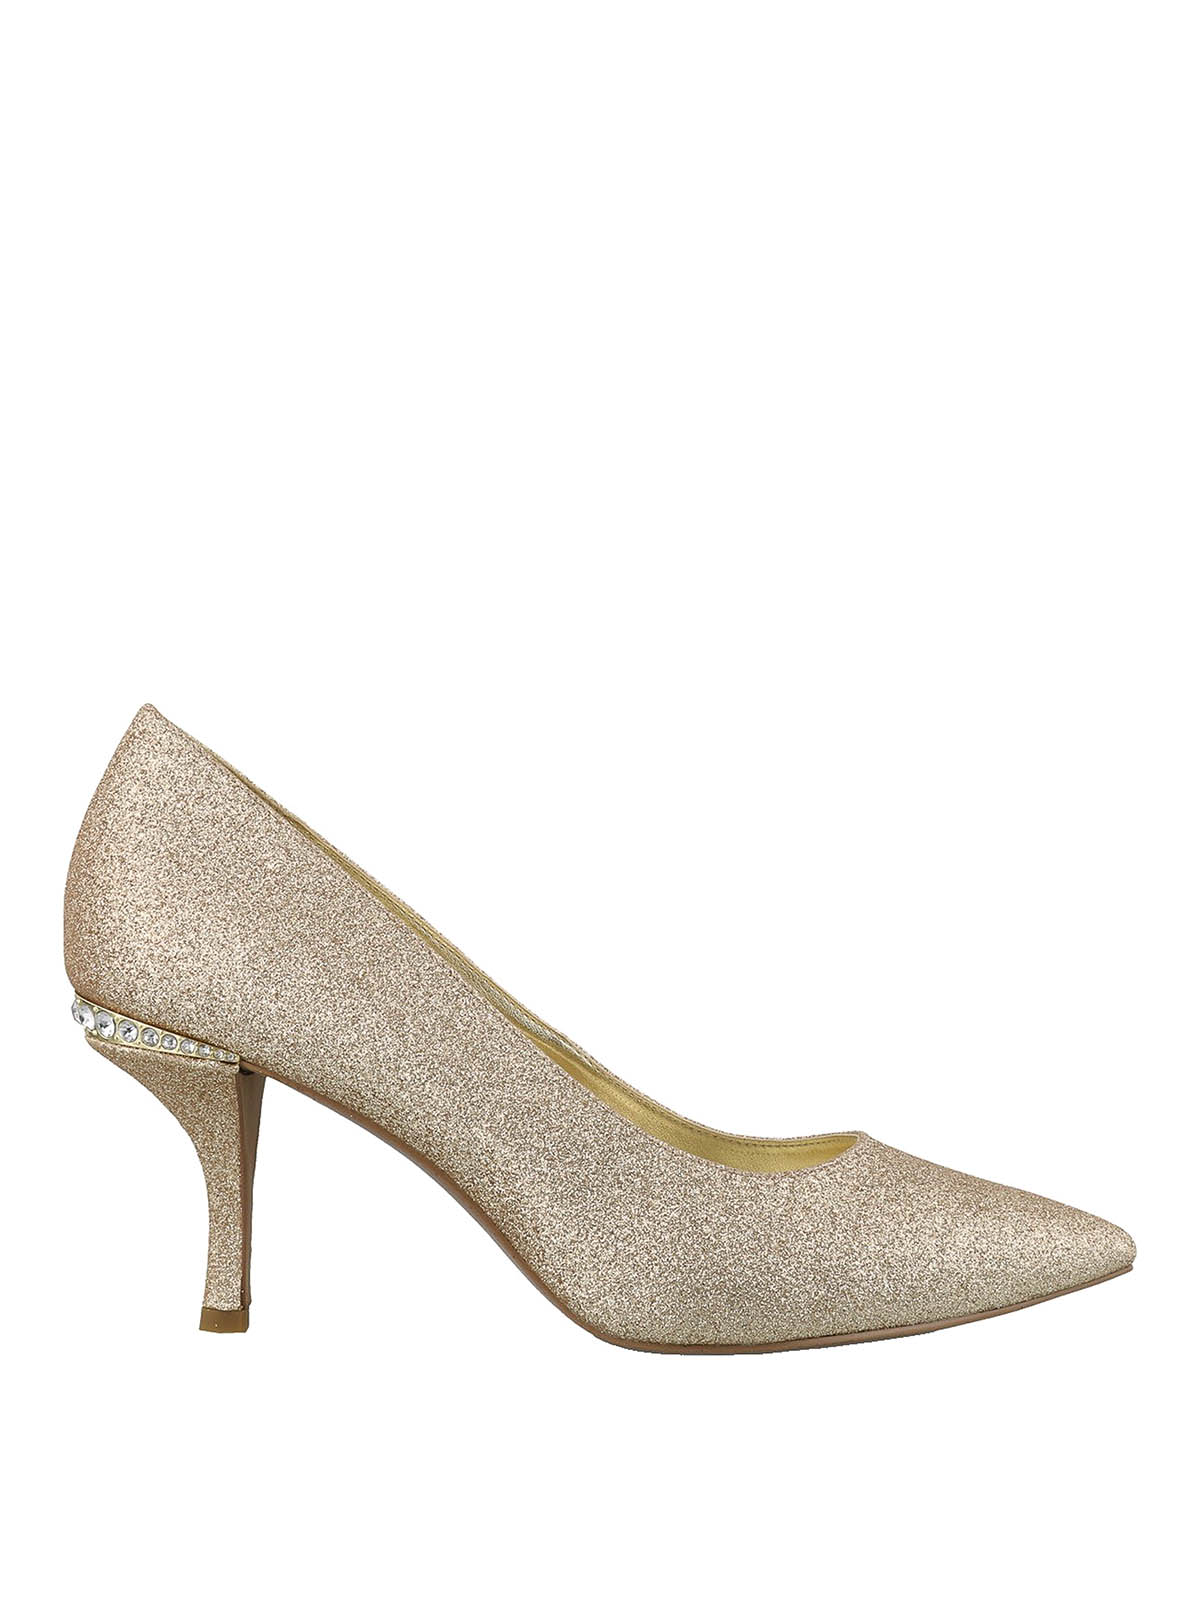 Court shoes Michael Kors - Malinda glittered pumps - 40R0MLMP1D210